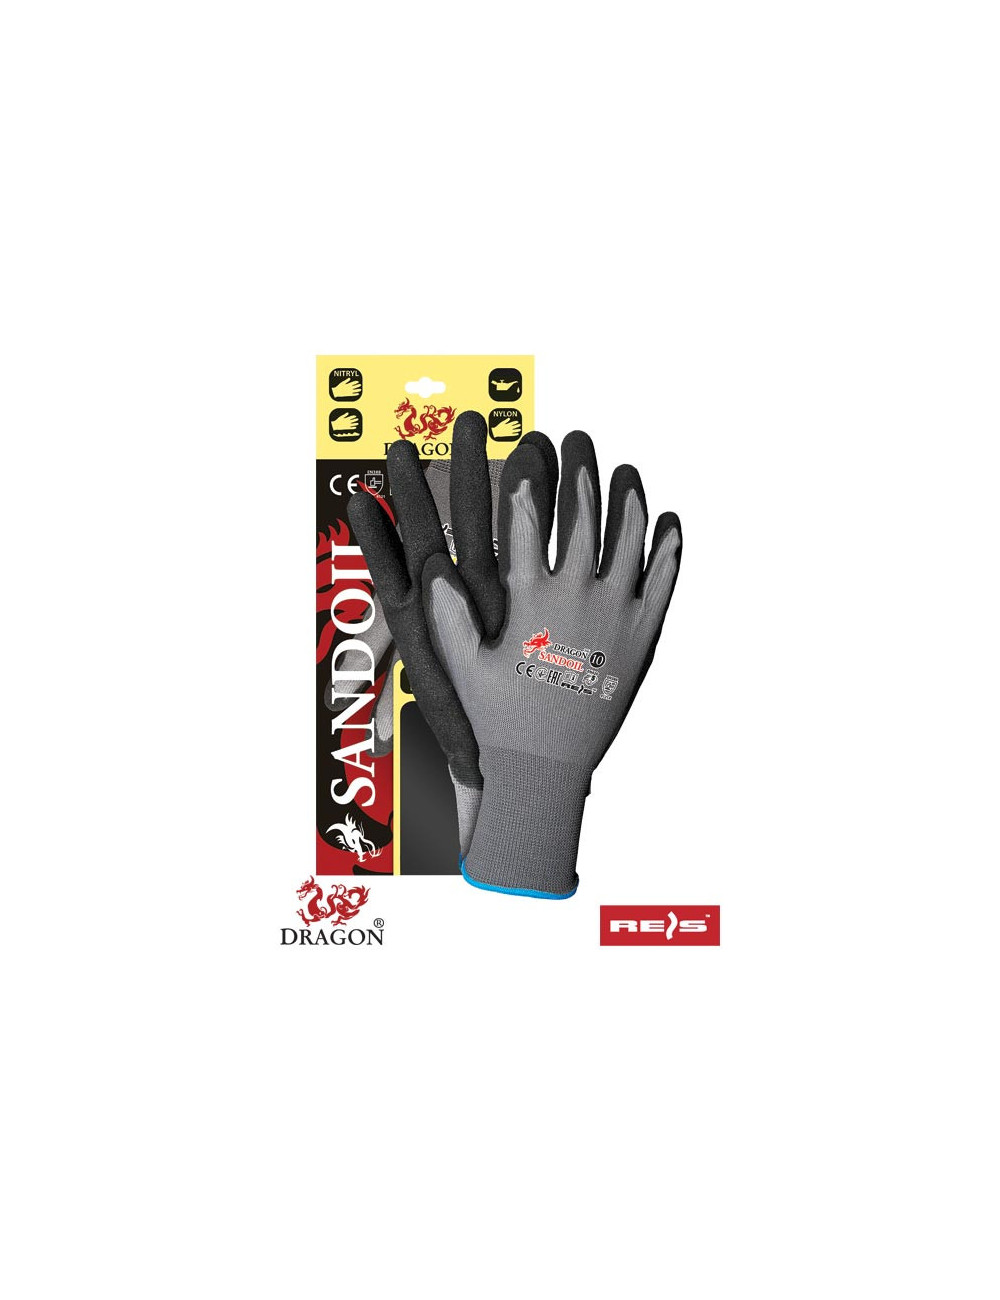 Protective gloves sandoil sb grey-black Reis